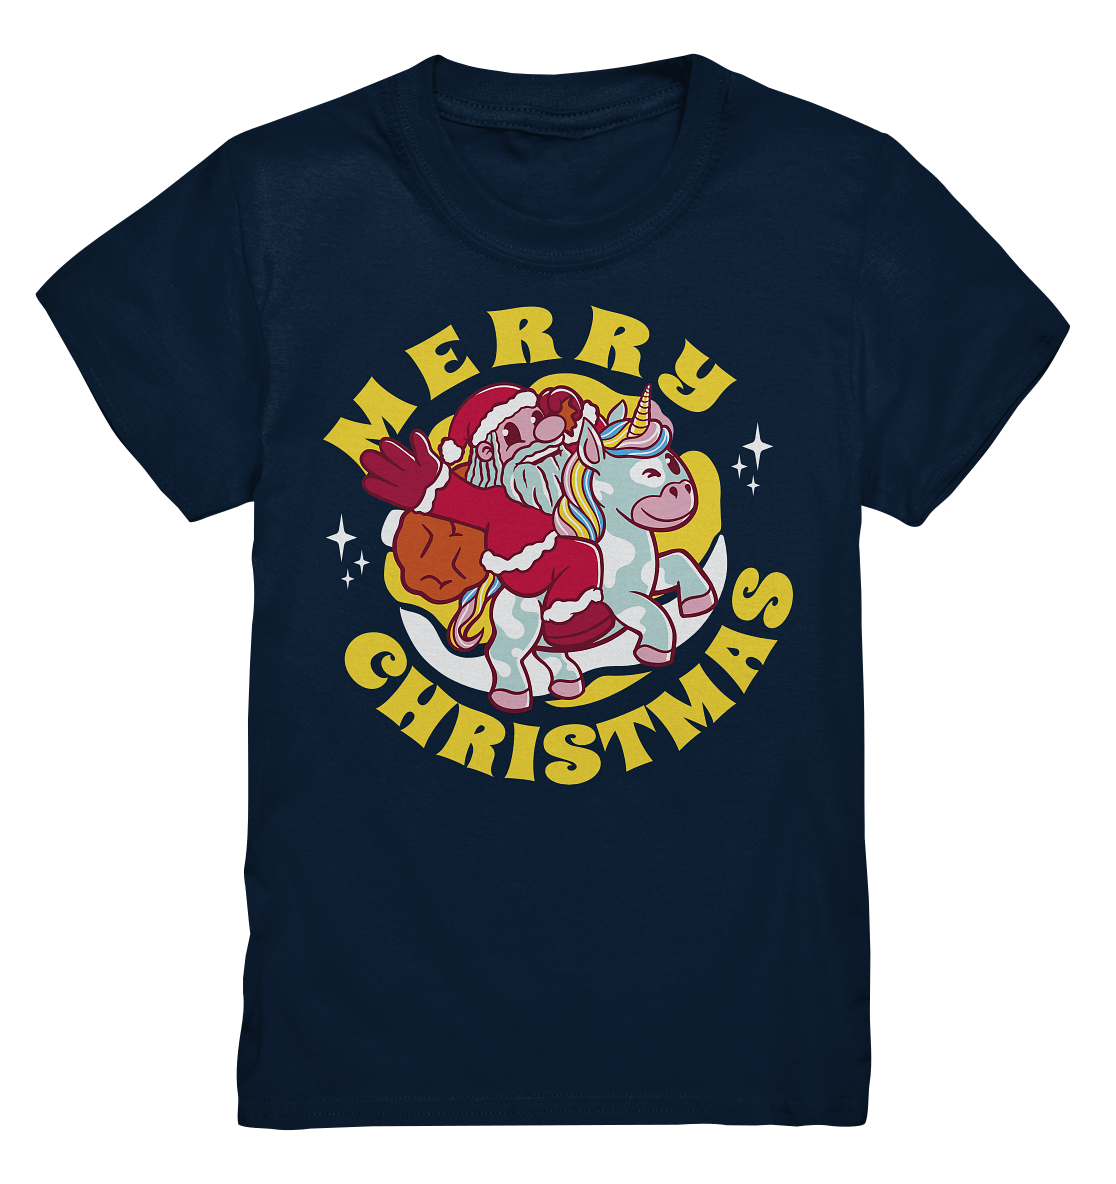 Reitender Nikolaus,Merry Christmas, Frohe Weihnachten  - Kids Premium Shirt